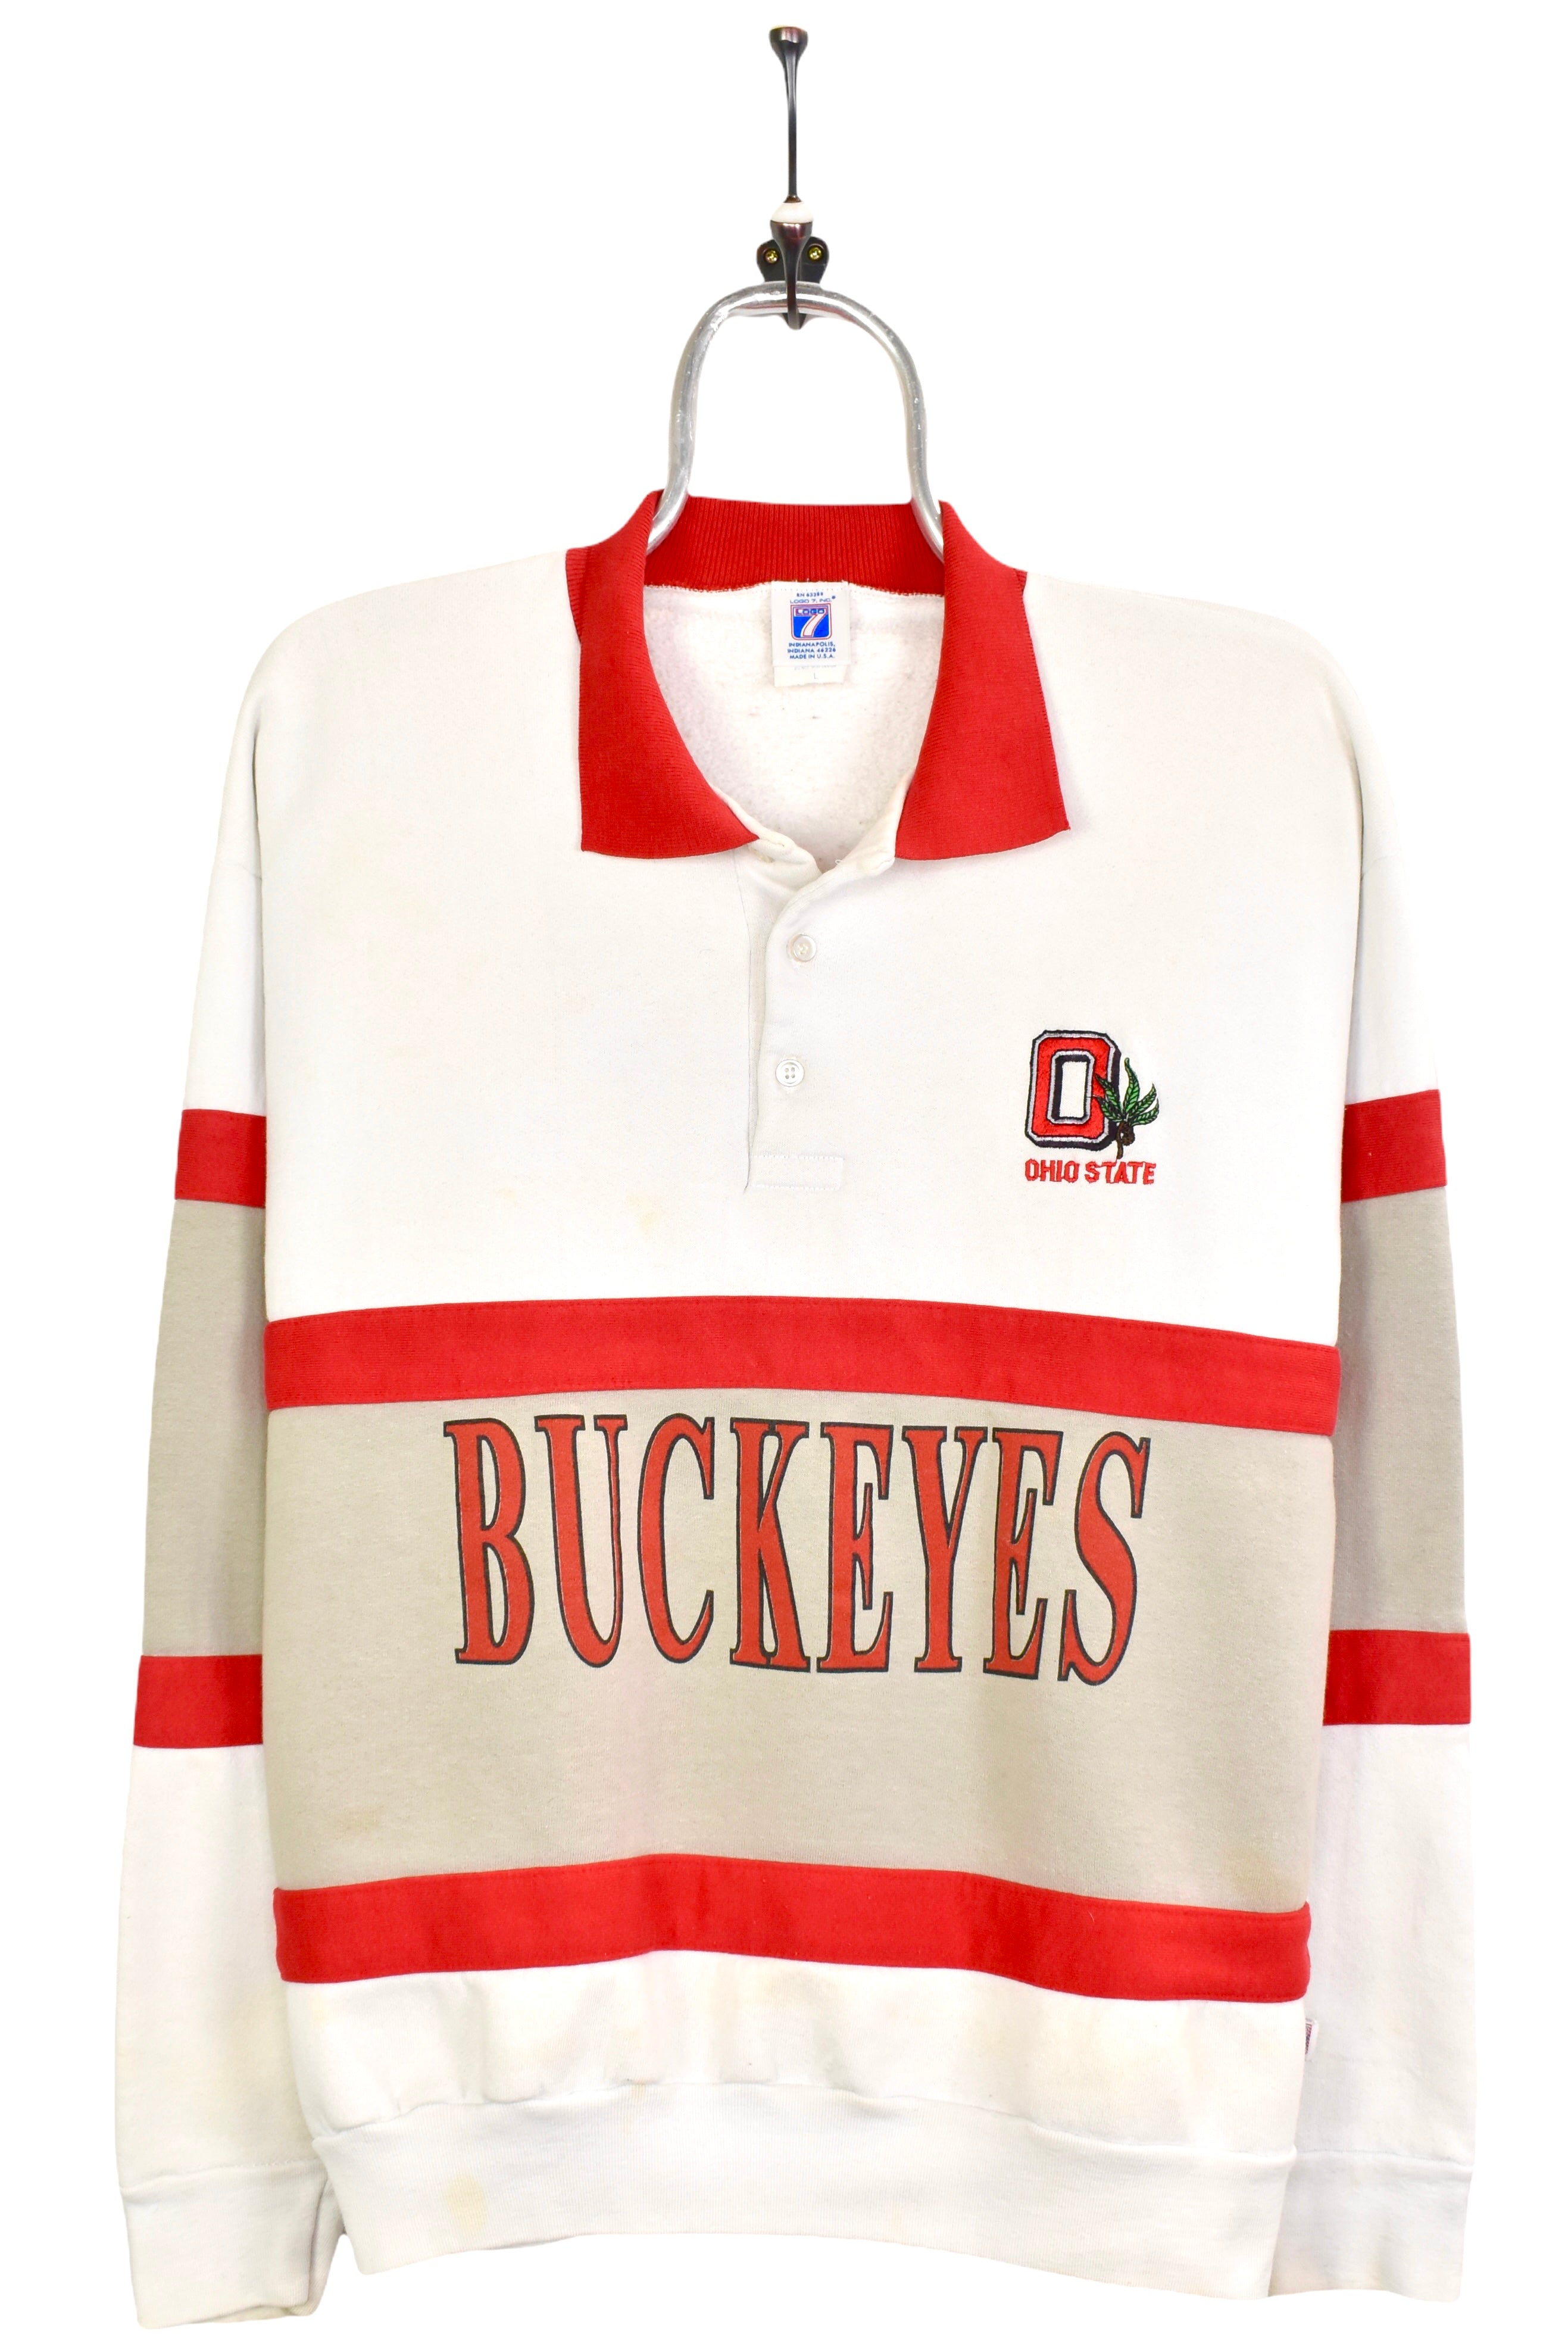 Vintage Ohio State University Buckeyes embroidered white sweatshirt | Medium COLLEGE